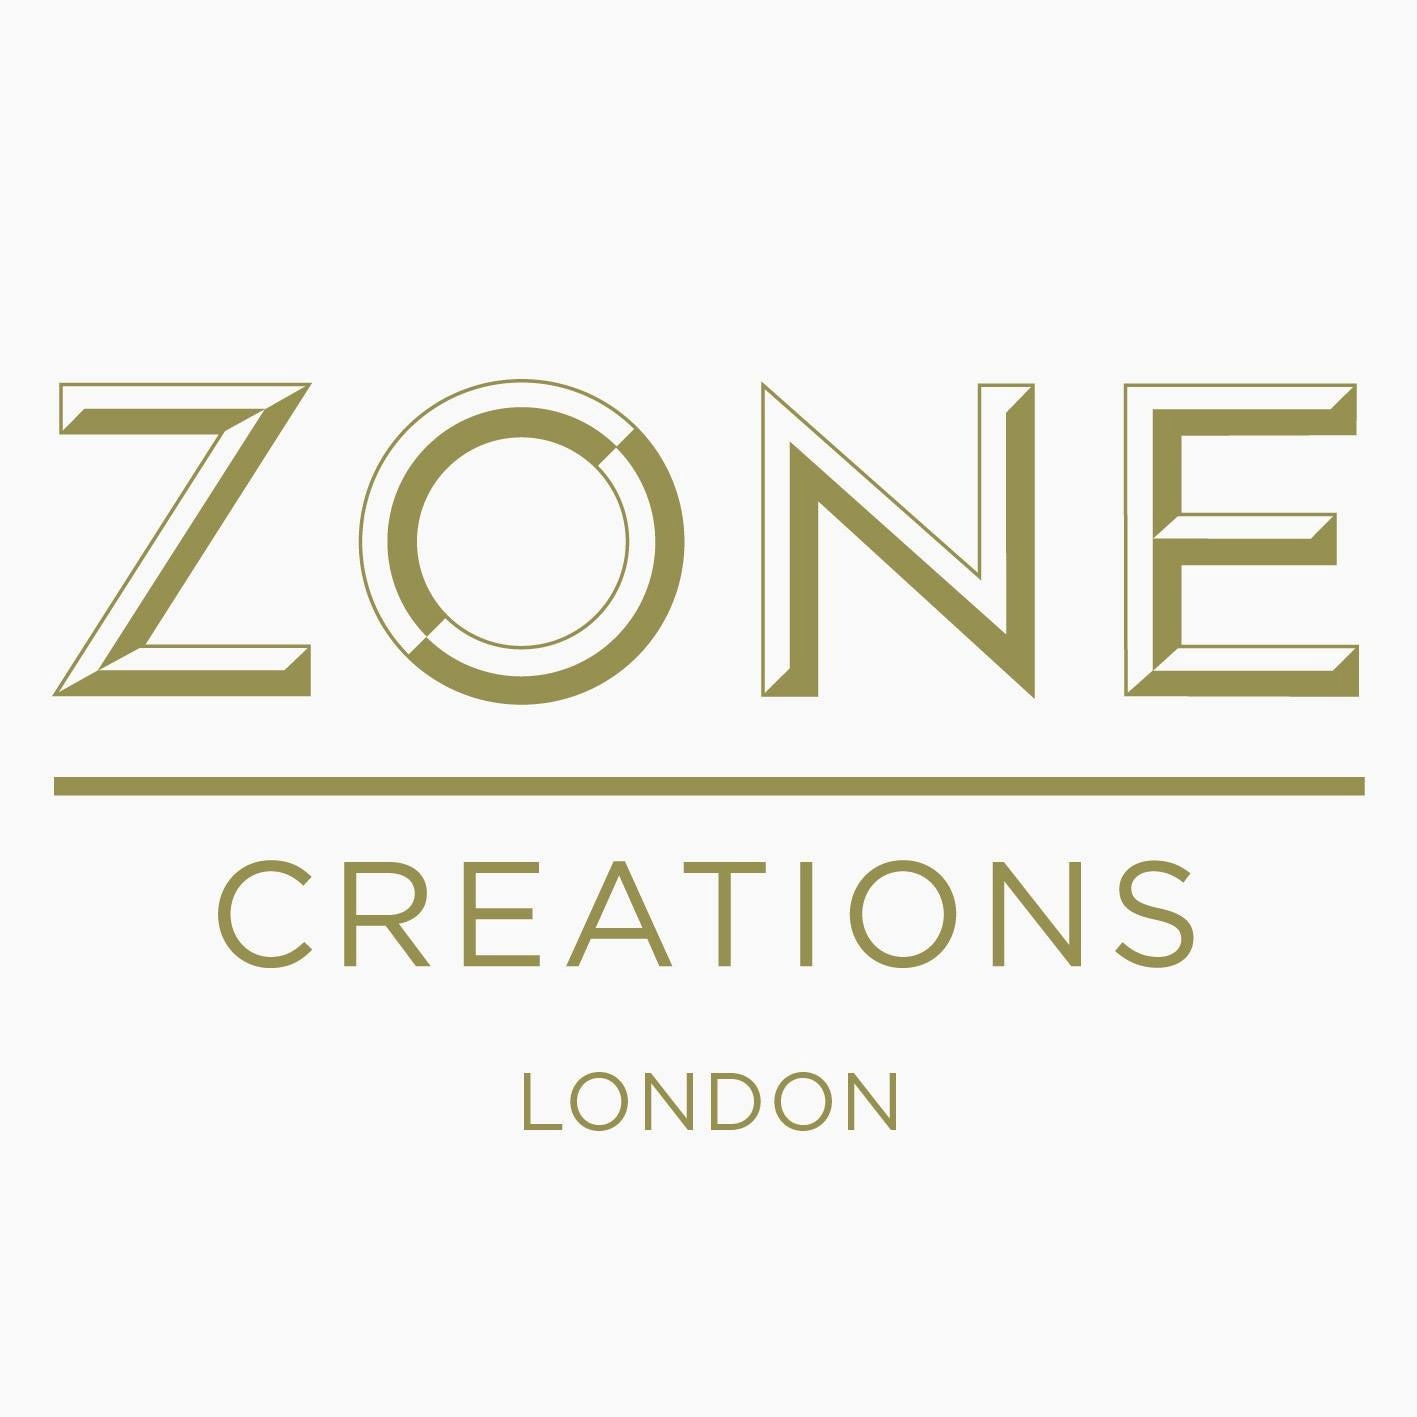 Zone Creations